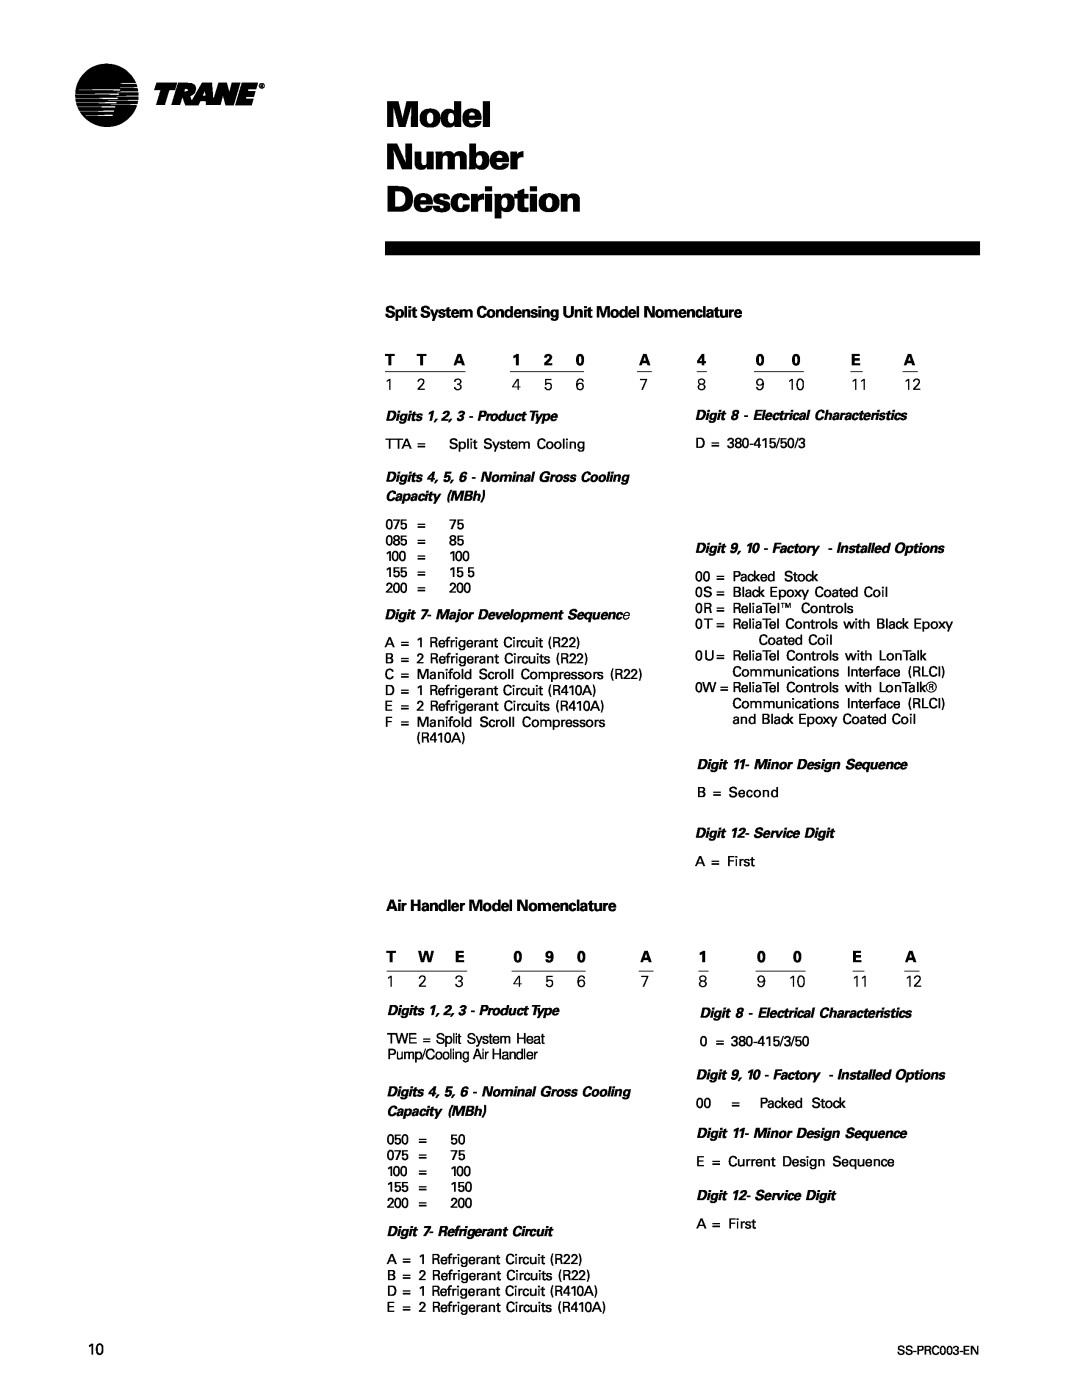 Trane SS-PRC003-EN manual Model Number Description, Split System Condensing Unit Model Nomenclature 